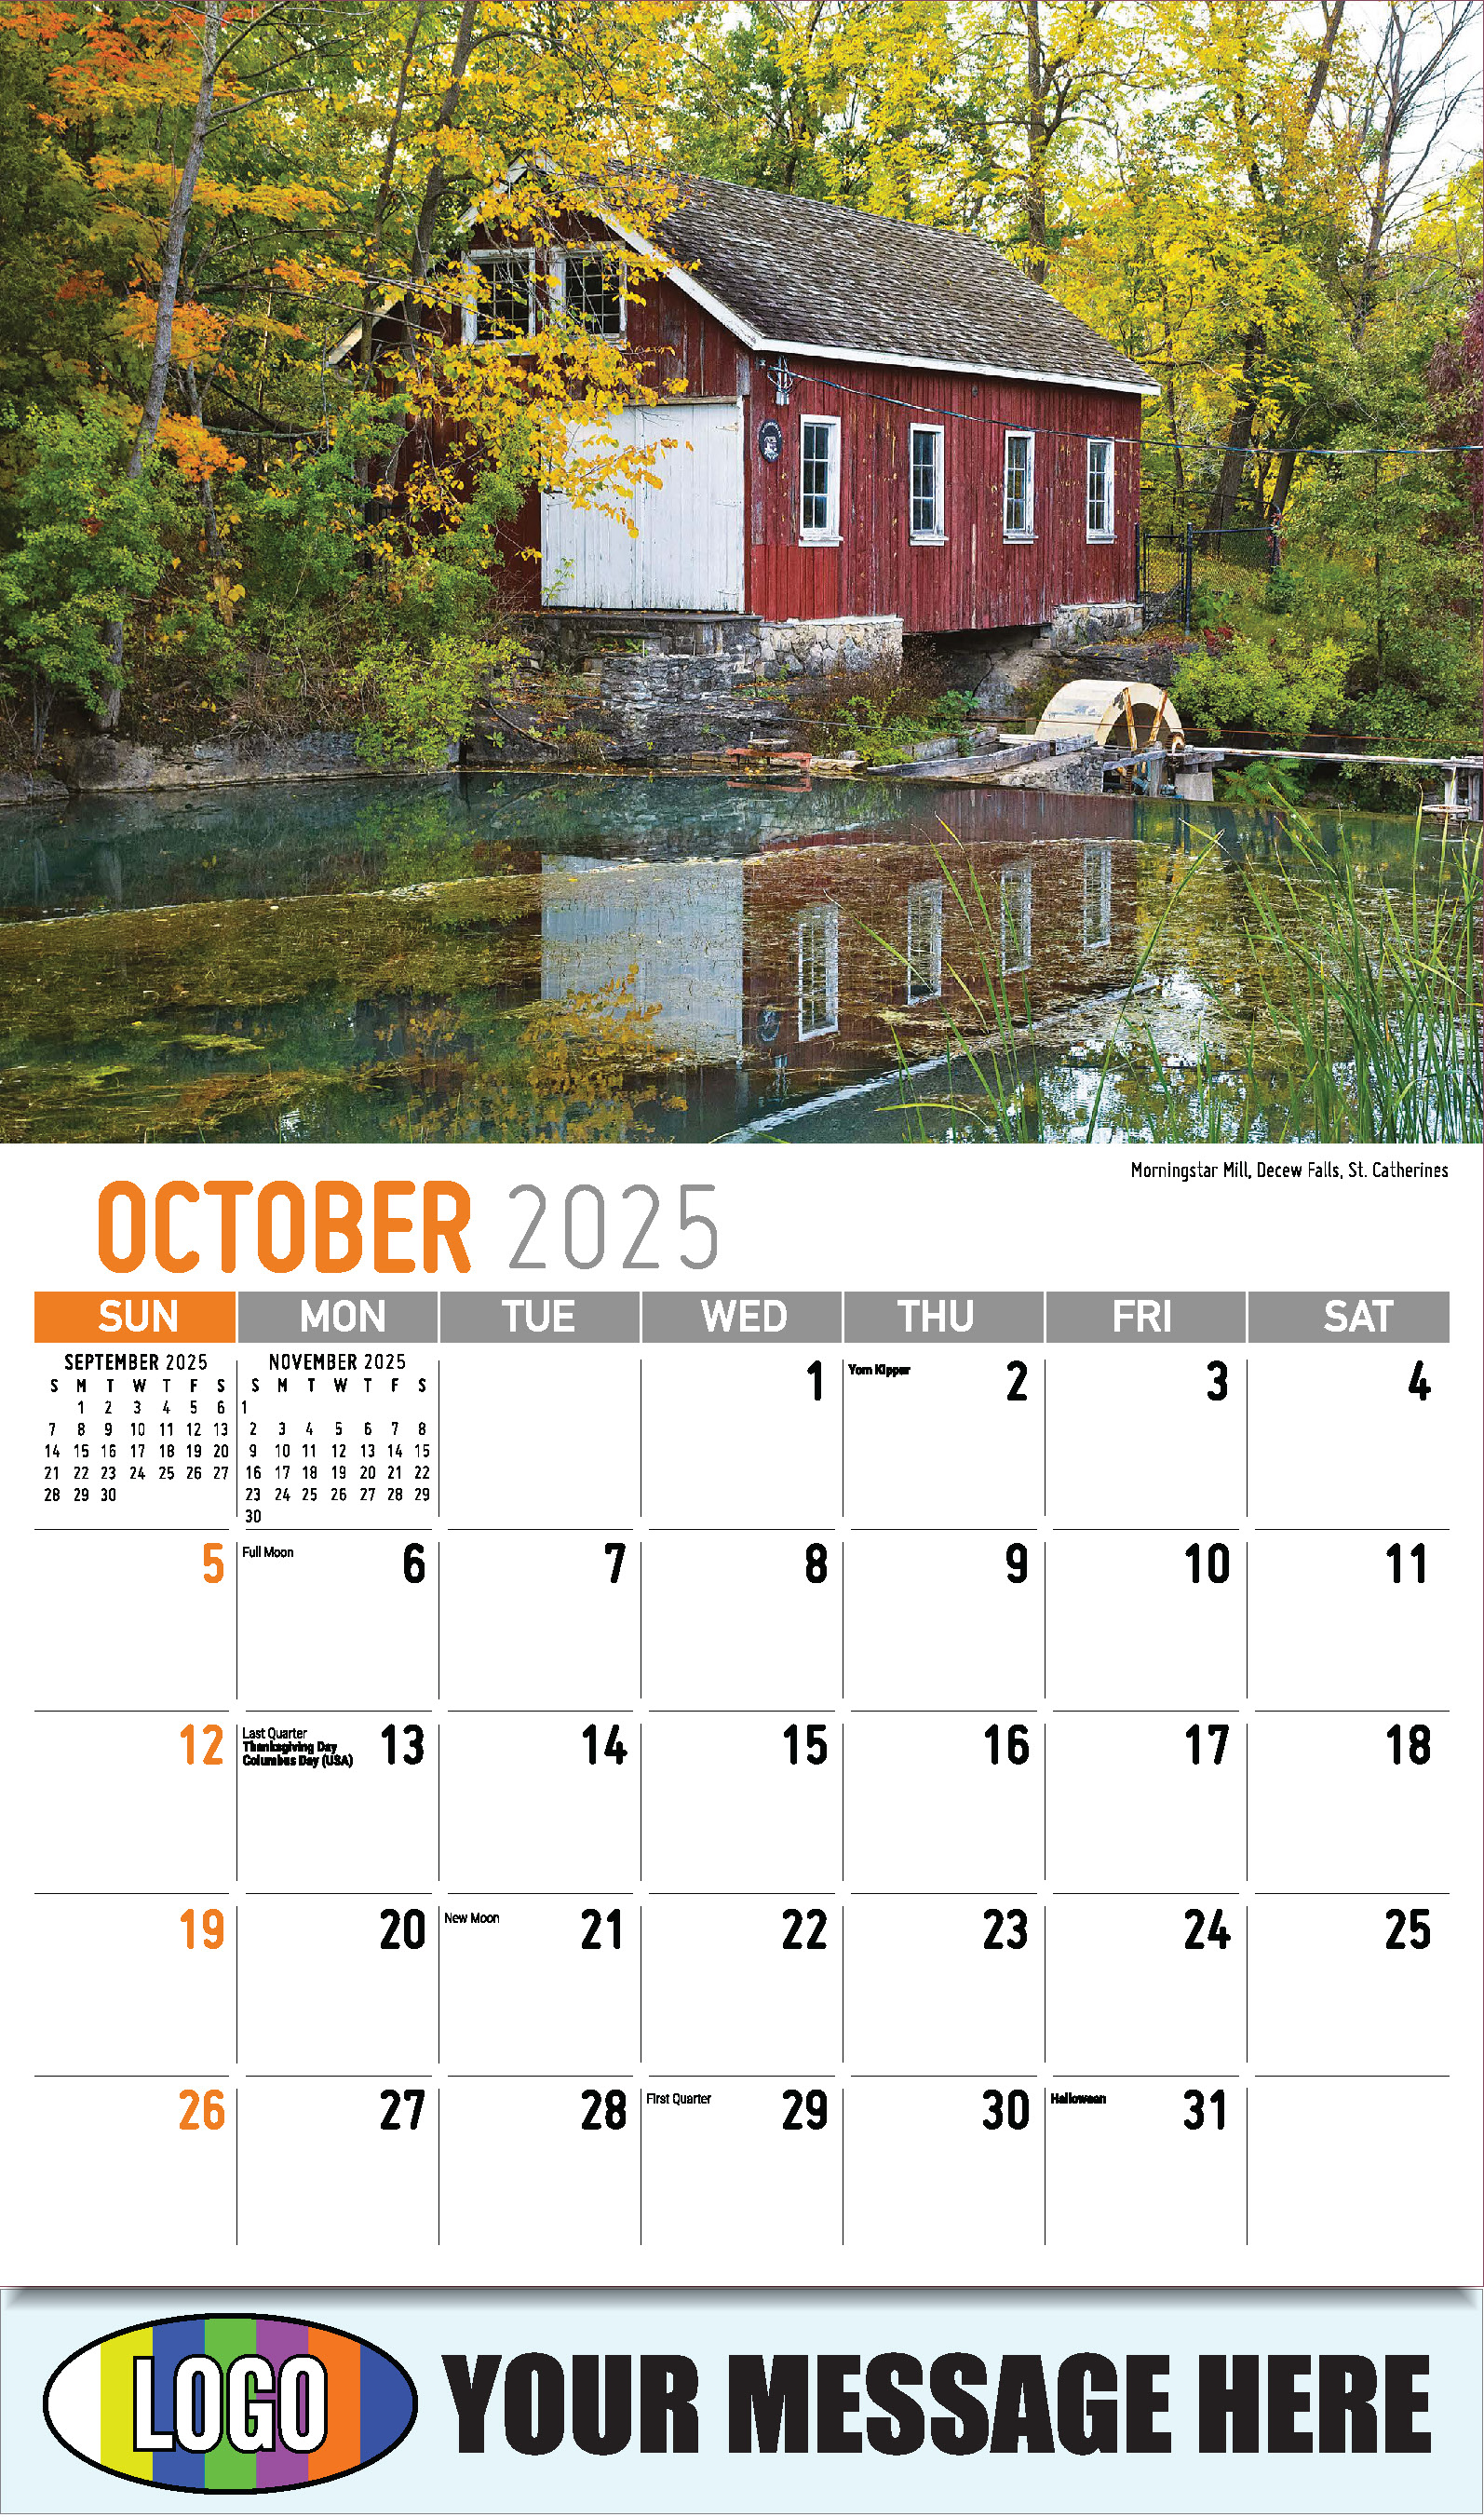 Scenes of Ontario 2025 Business Promo Wall Calendar - October